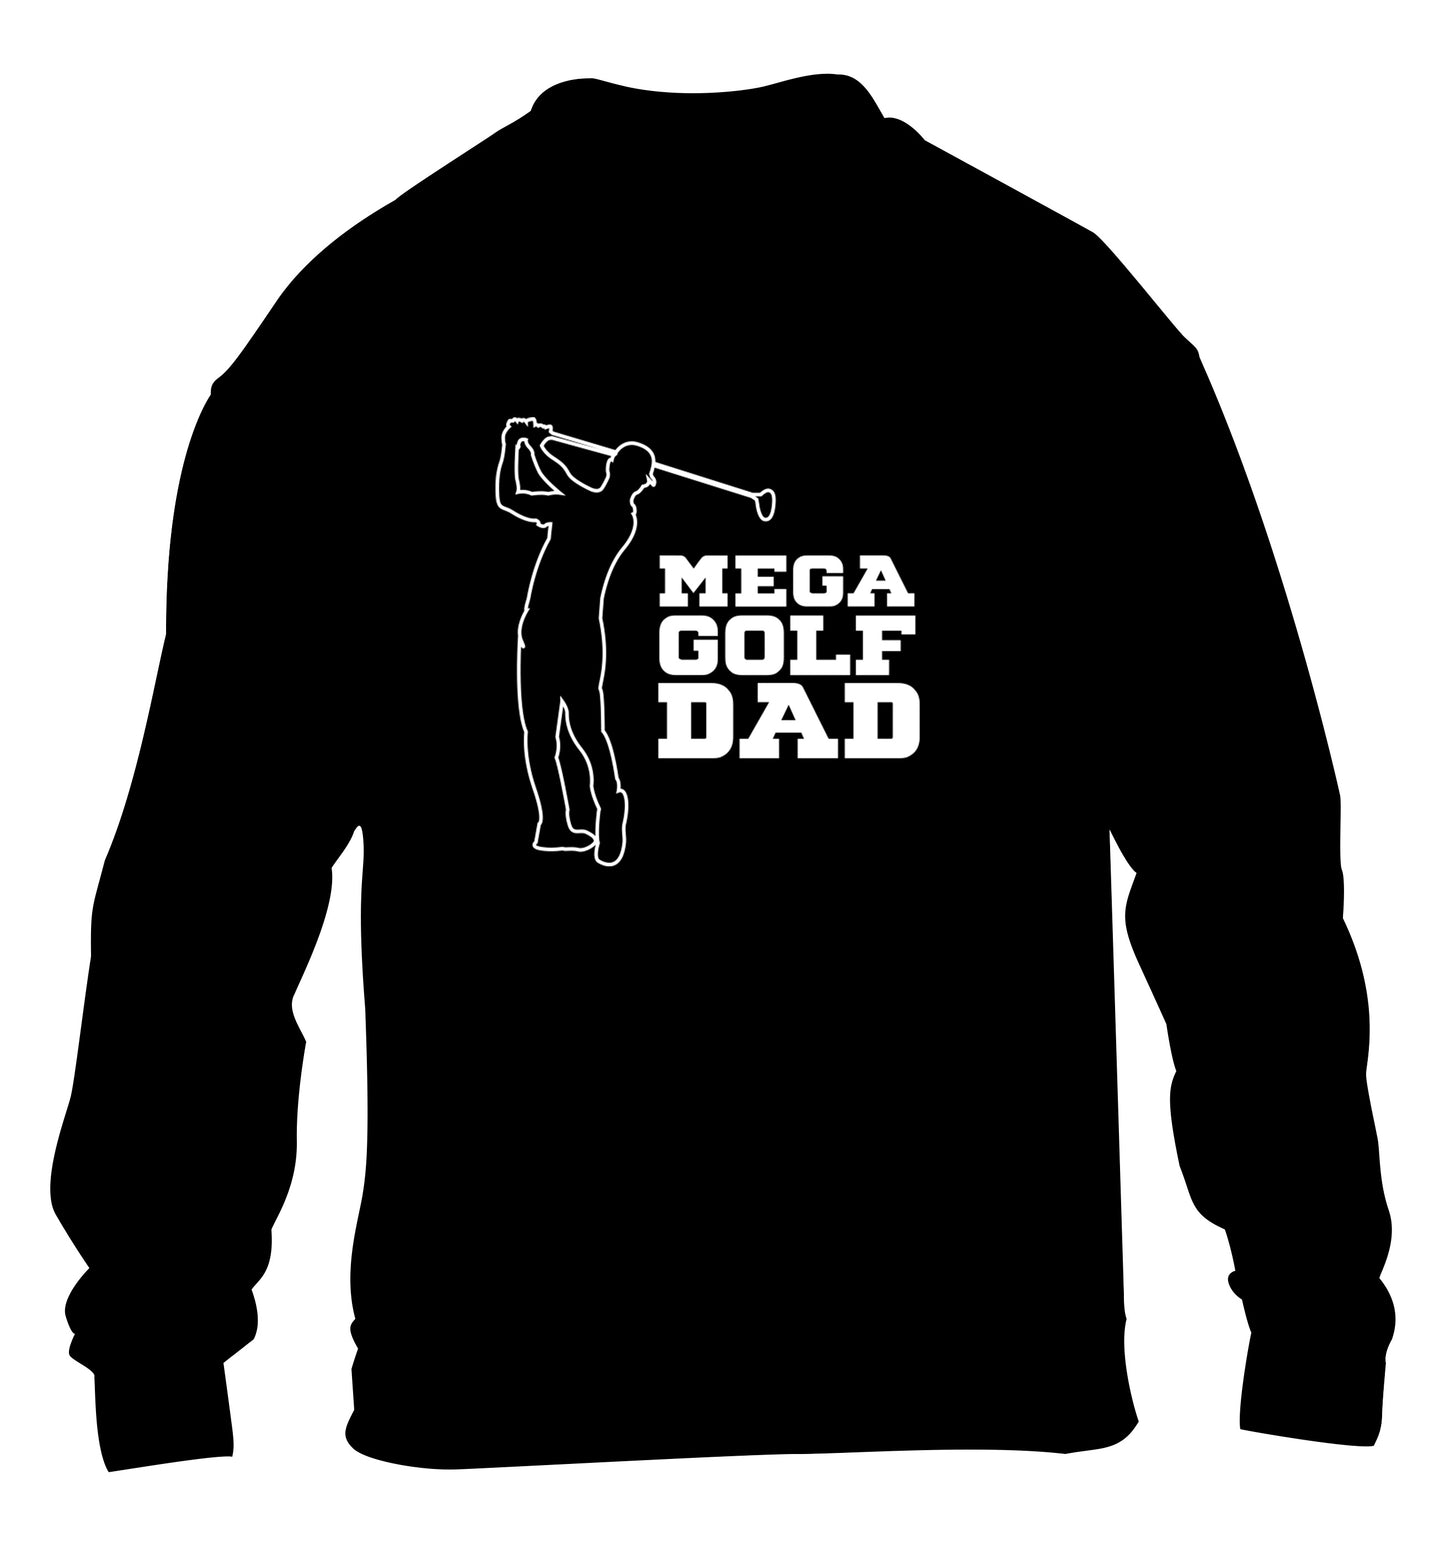 Mega golfing dad children's black sweater 12-13 Years